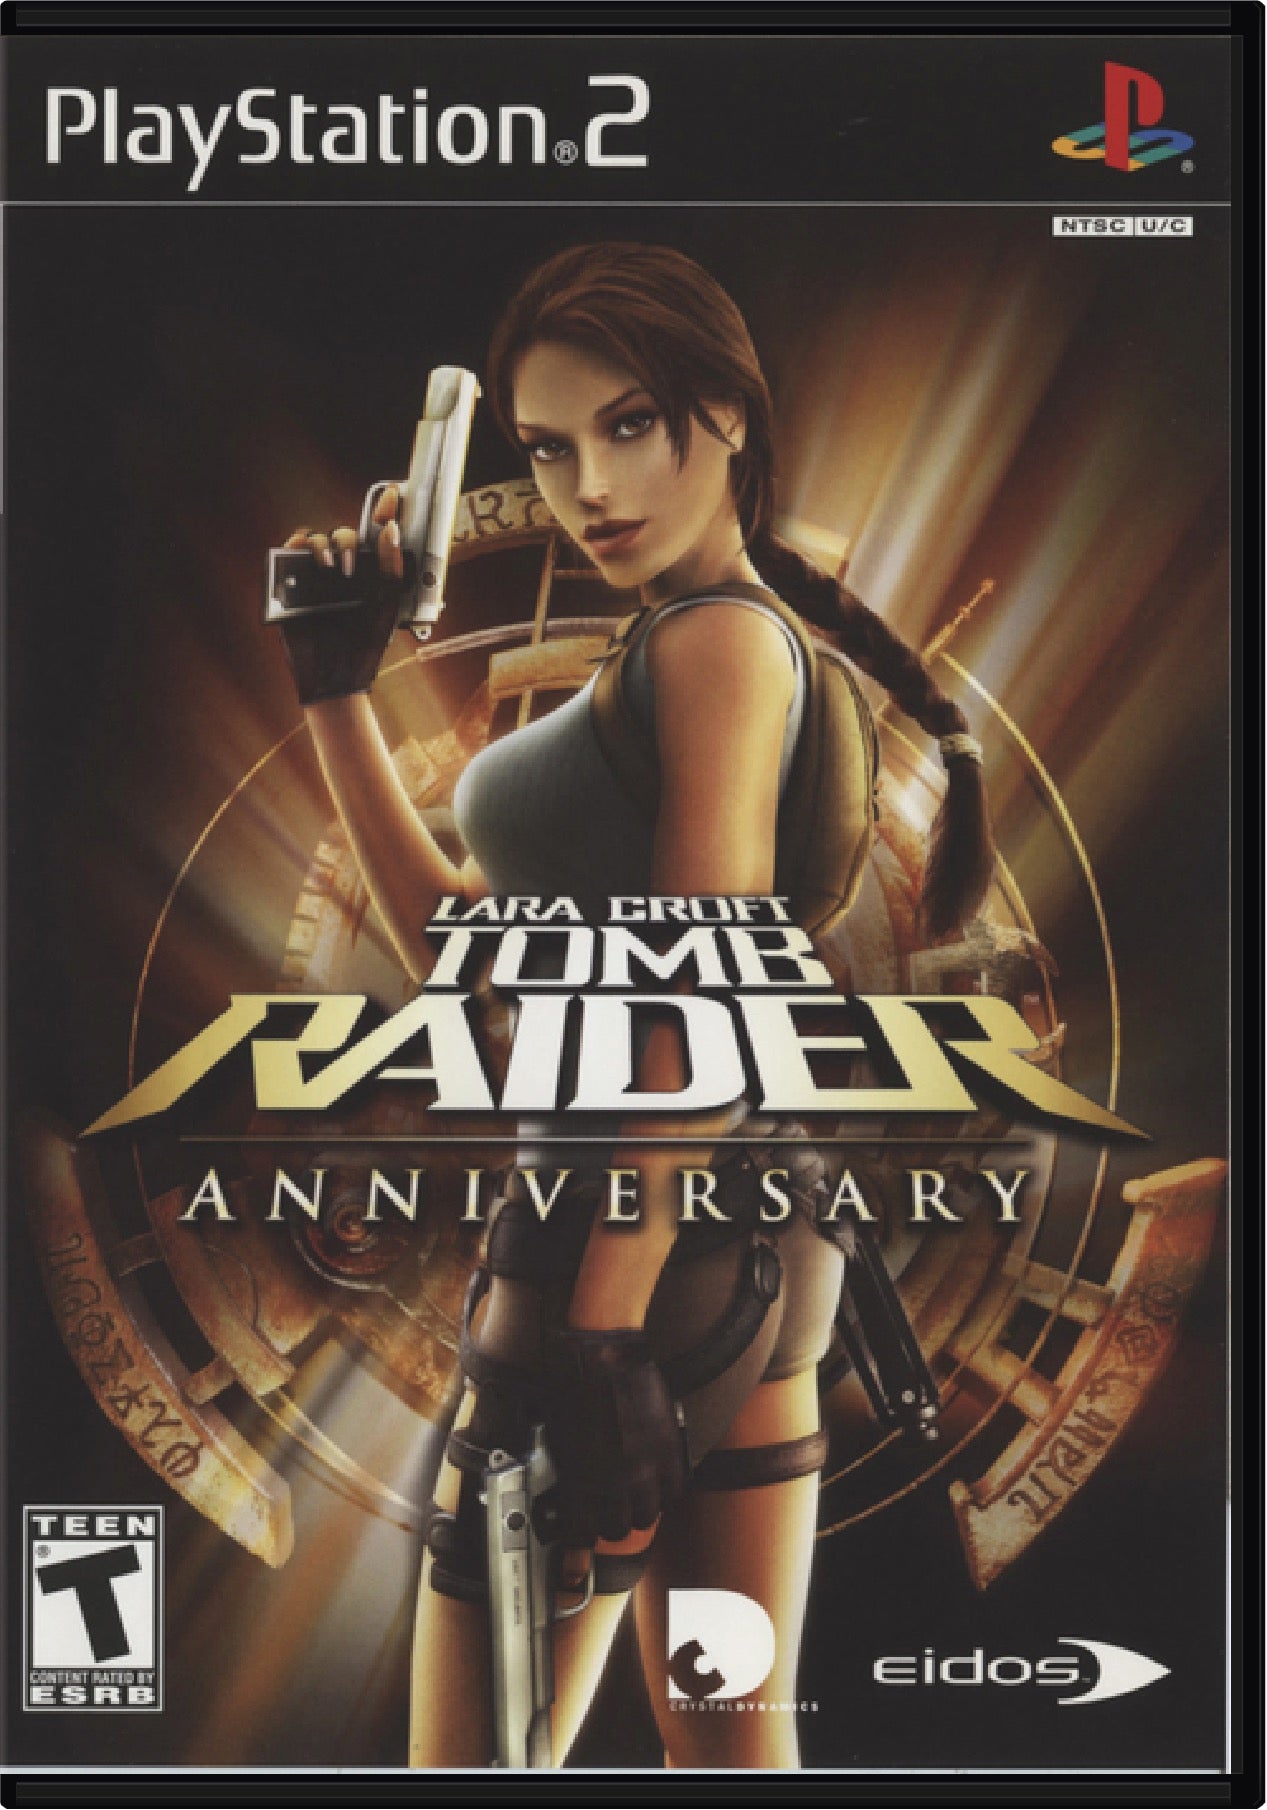 Tomb Raider Anniversary Cover Art and Product Photo